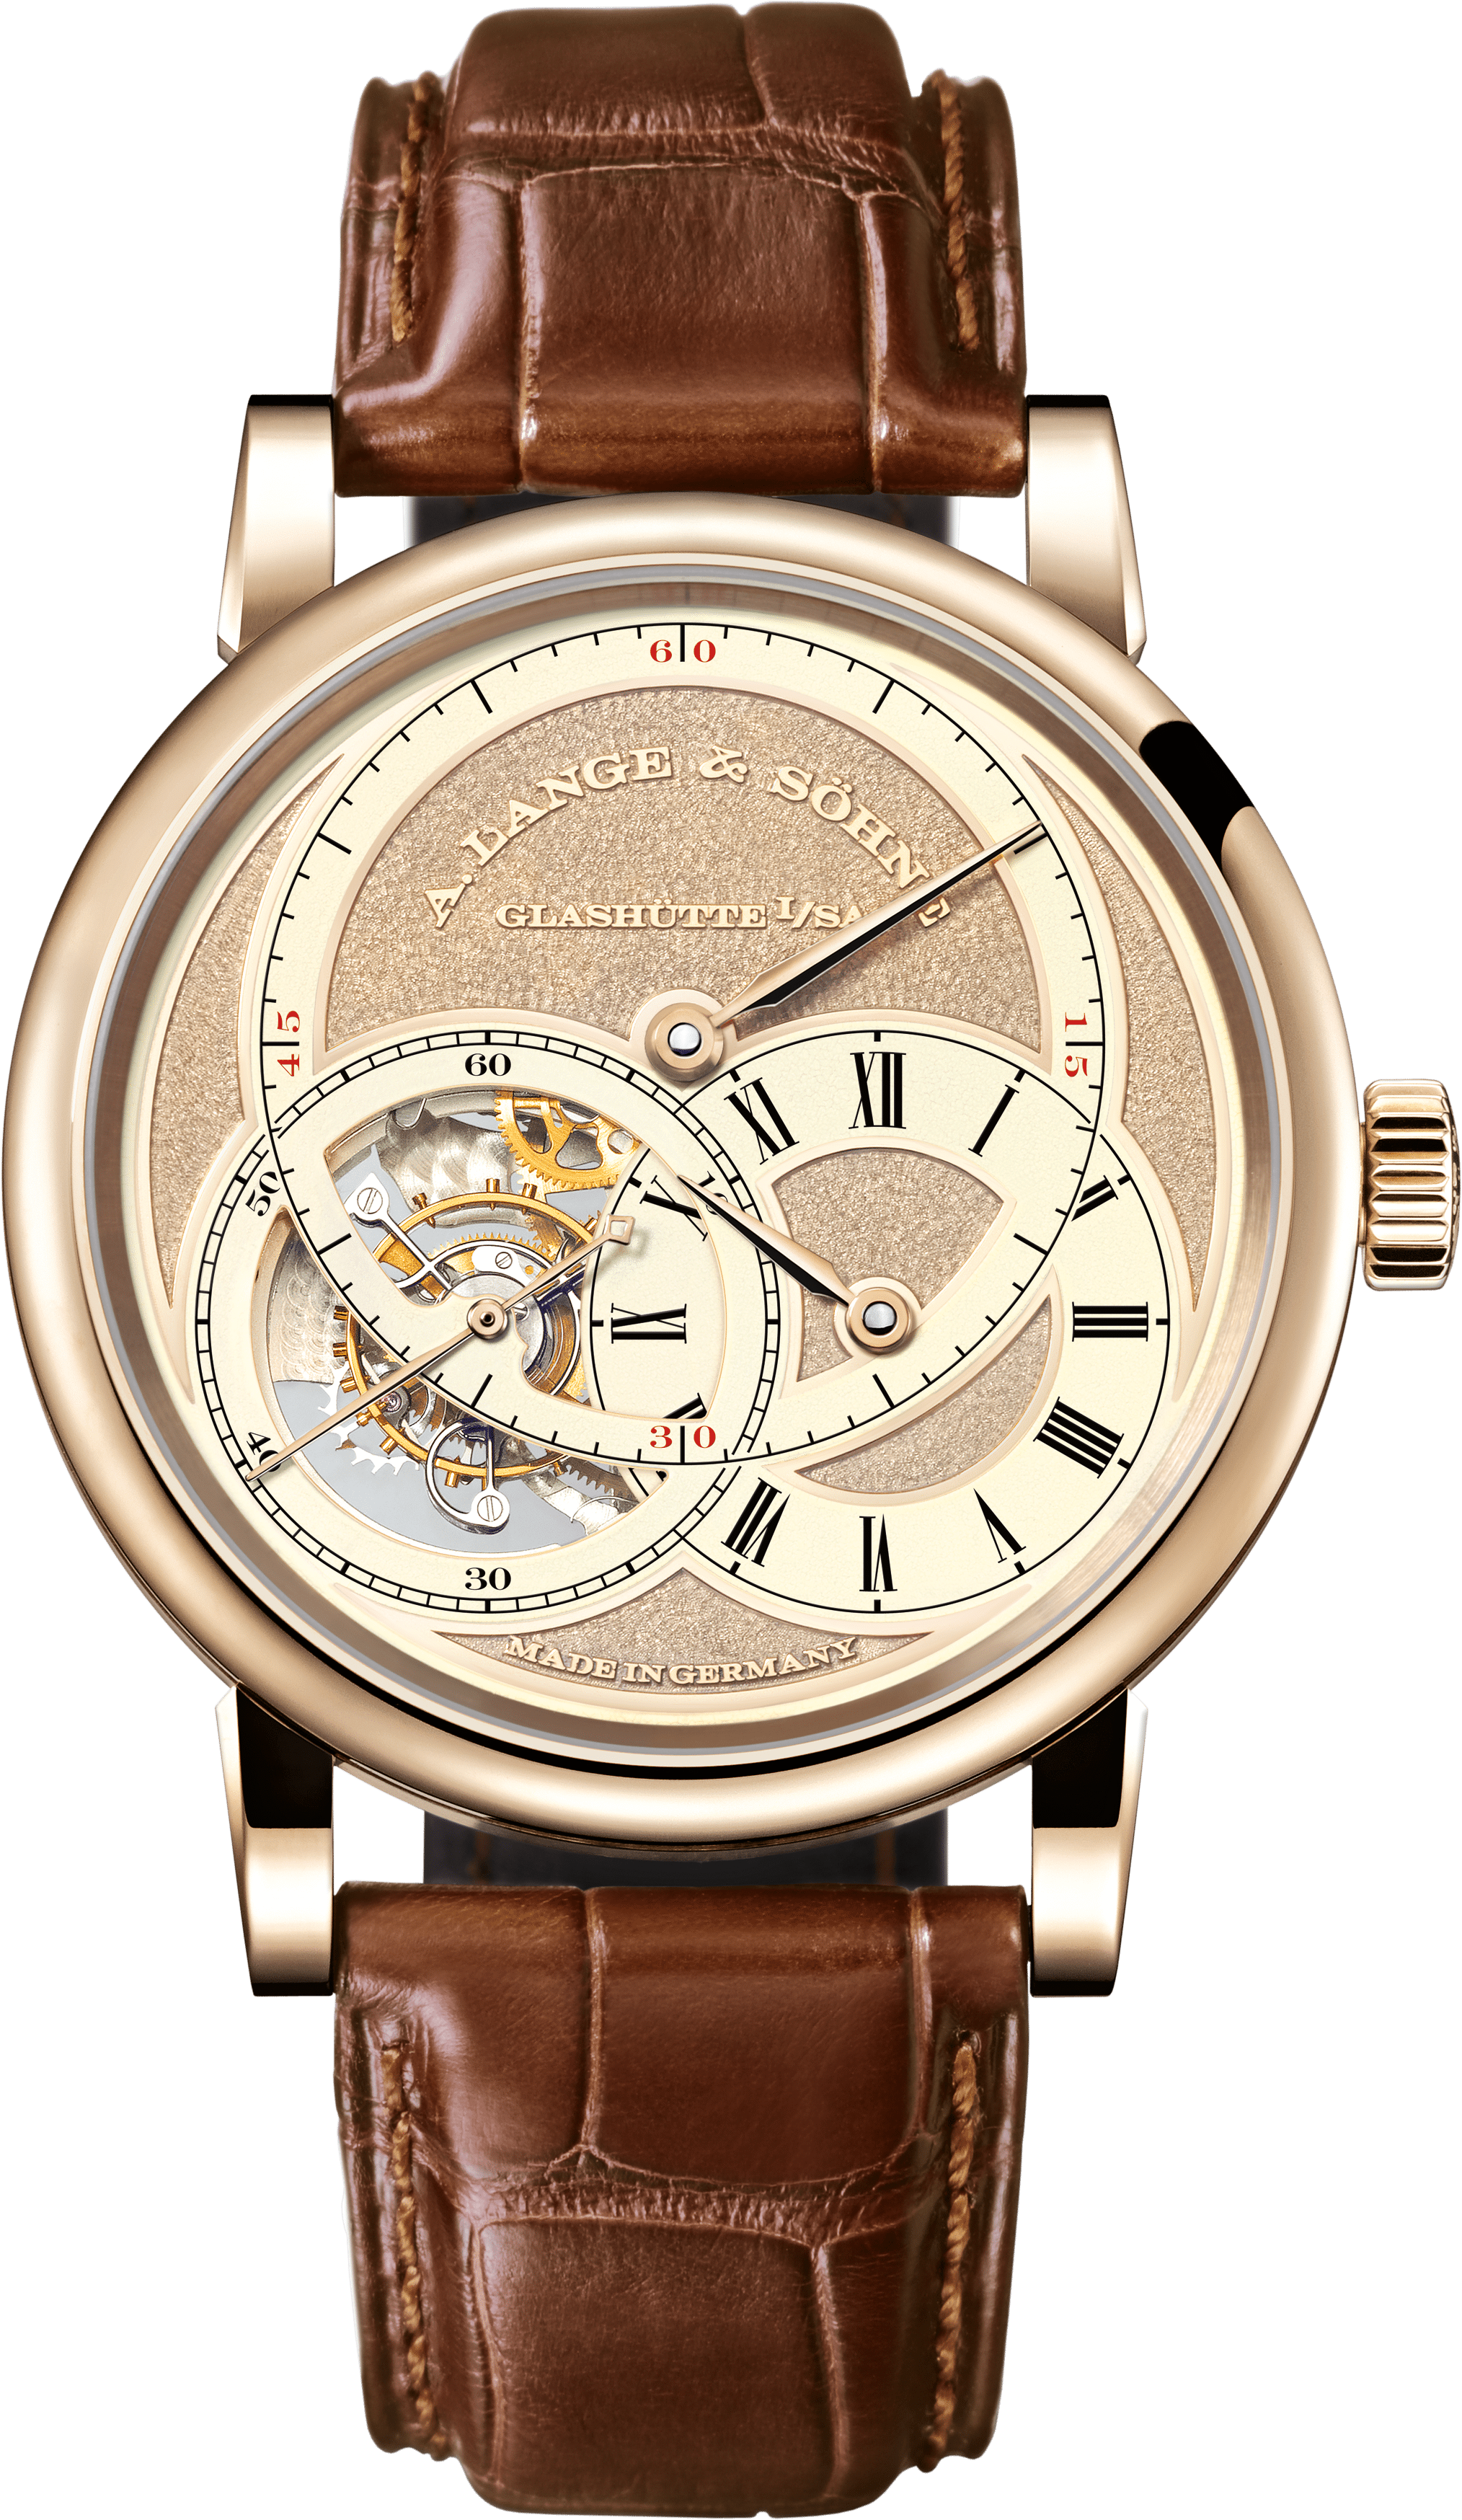 Fake Rolex Watches In Usa